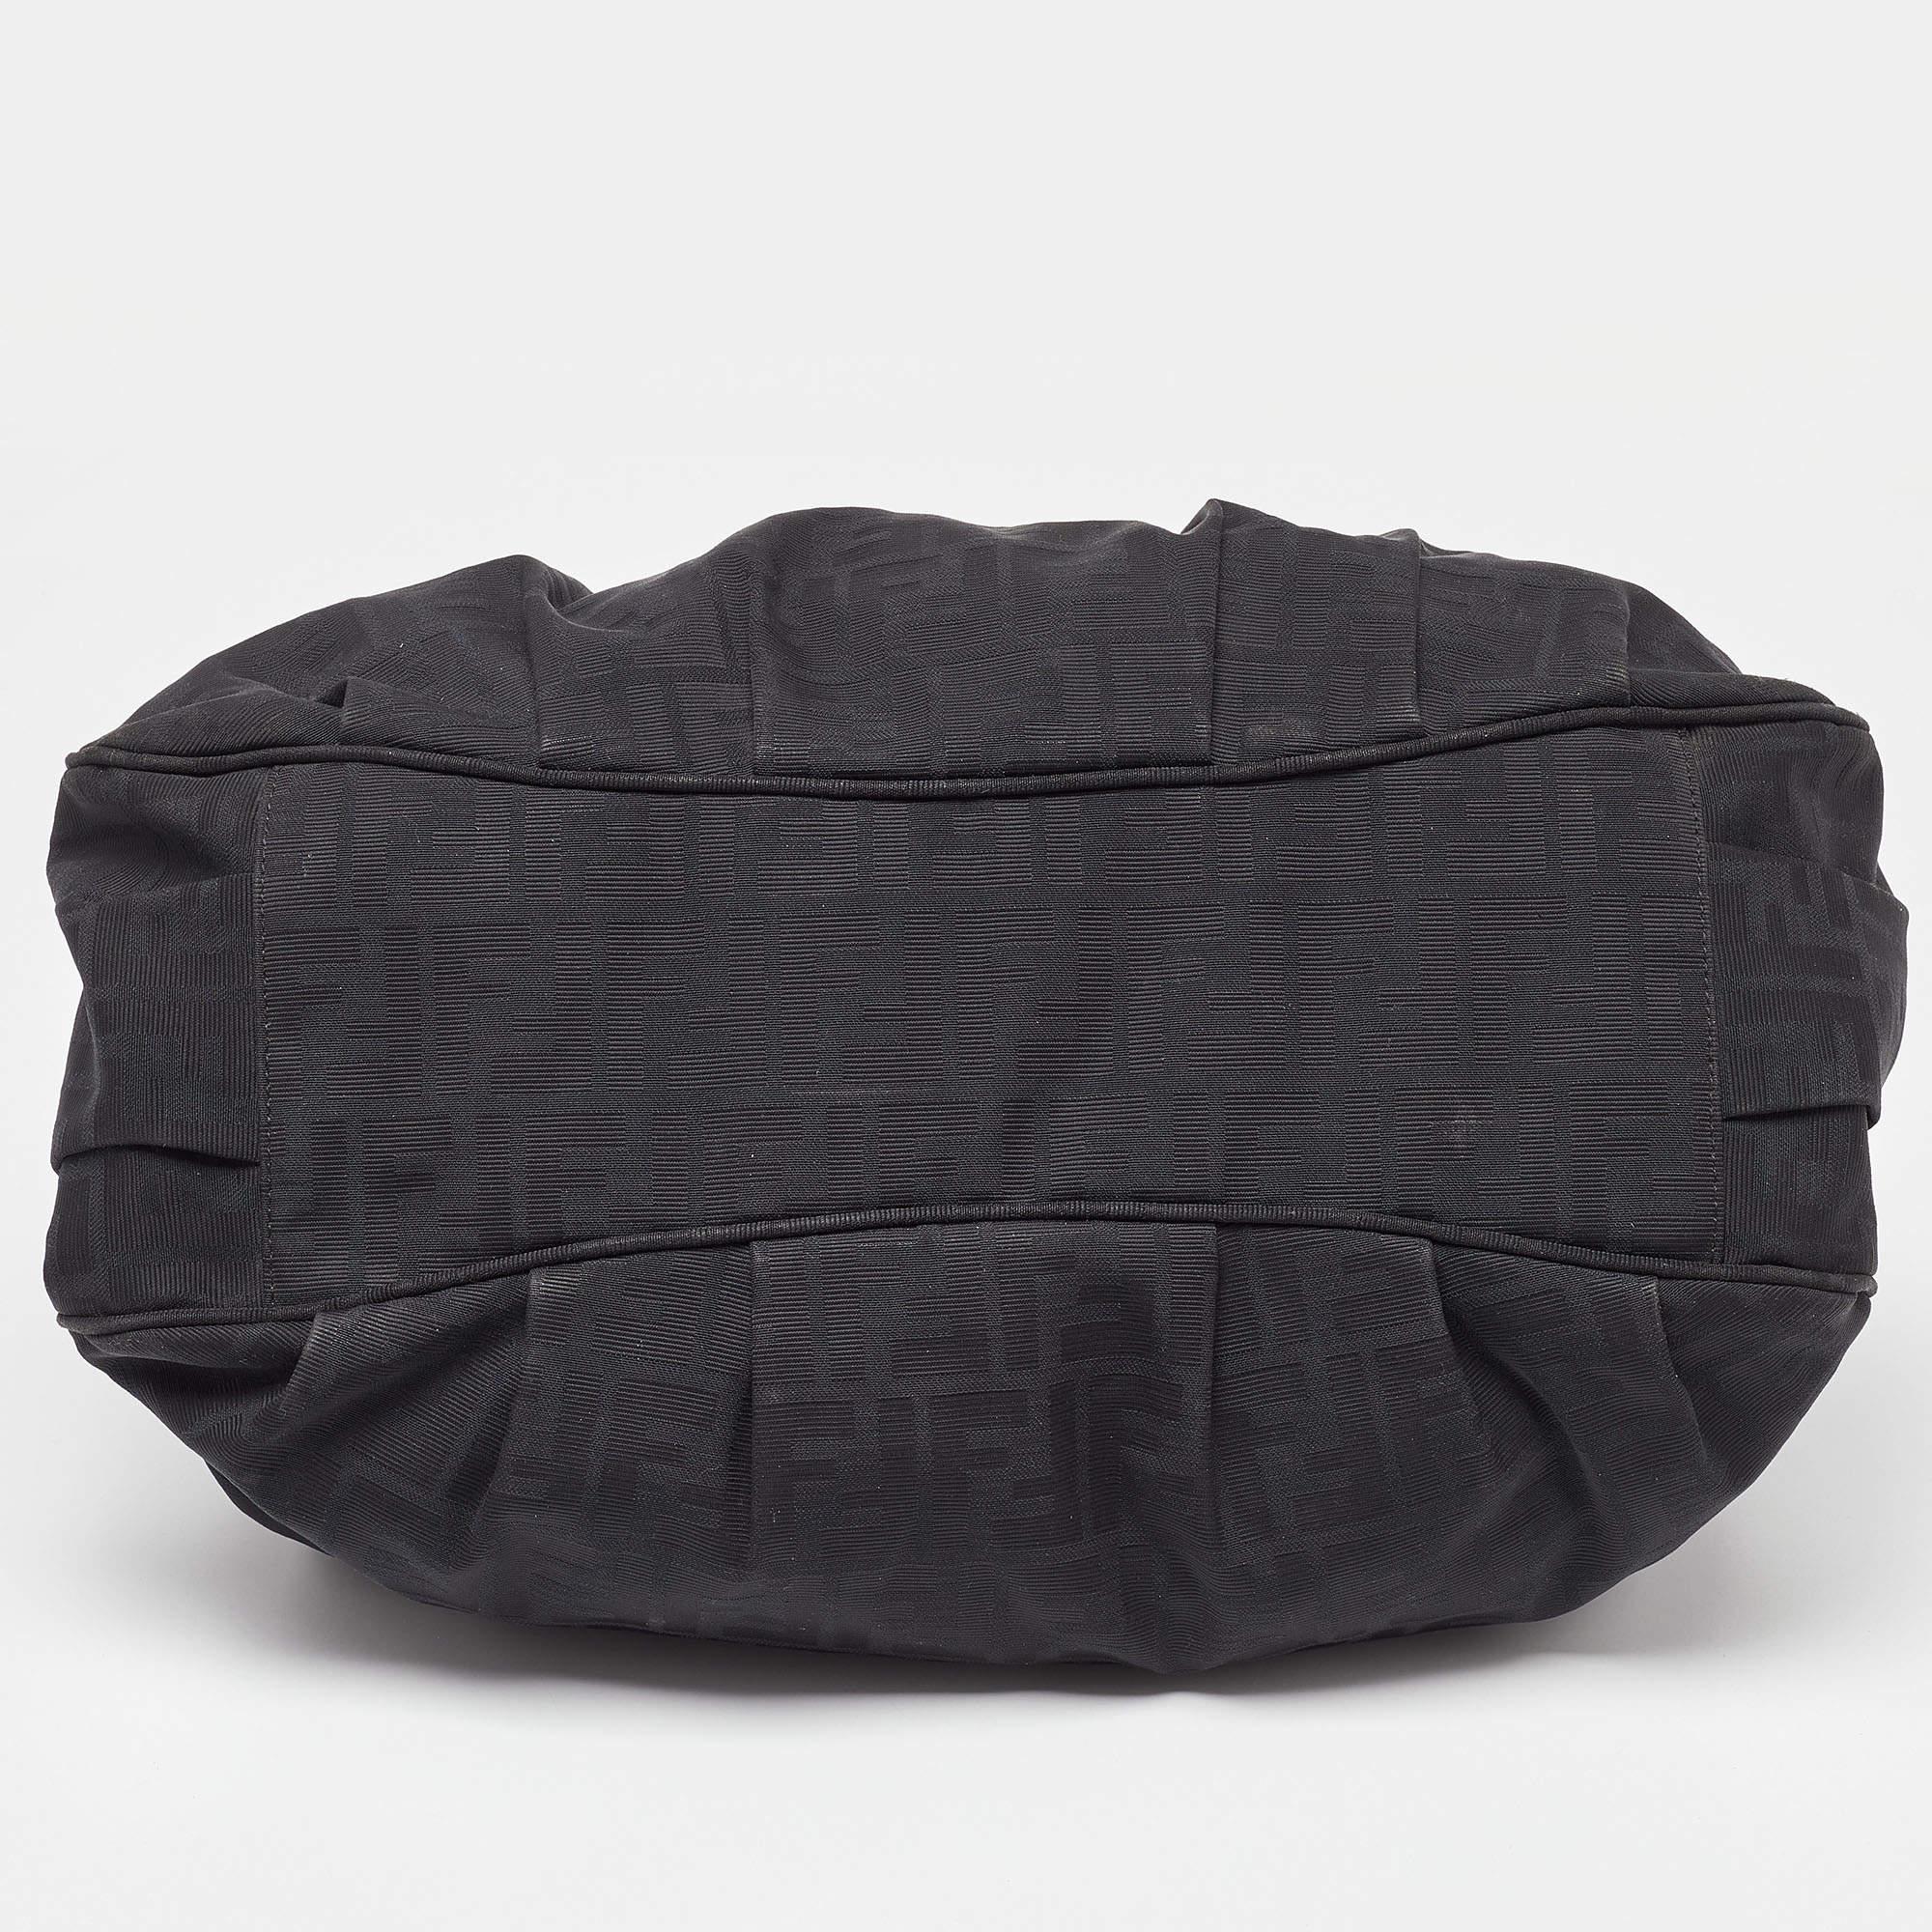 Fendi Black Zucca Canvas and Patent Leather Mia Shoulder Bag For Sale 8